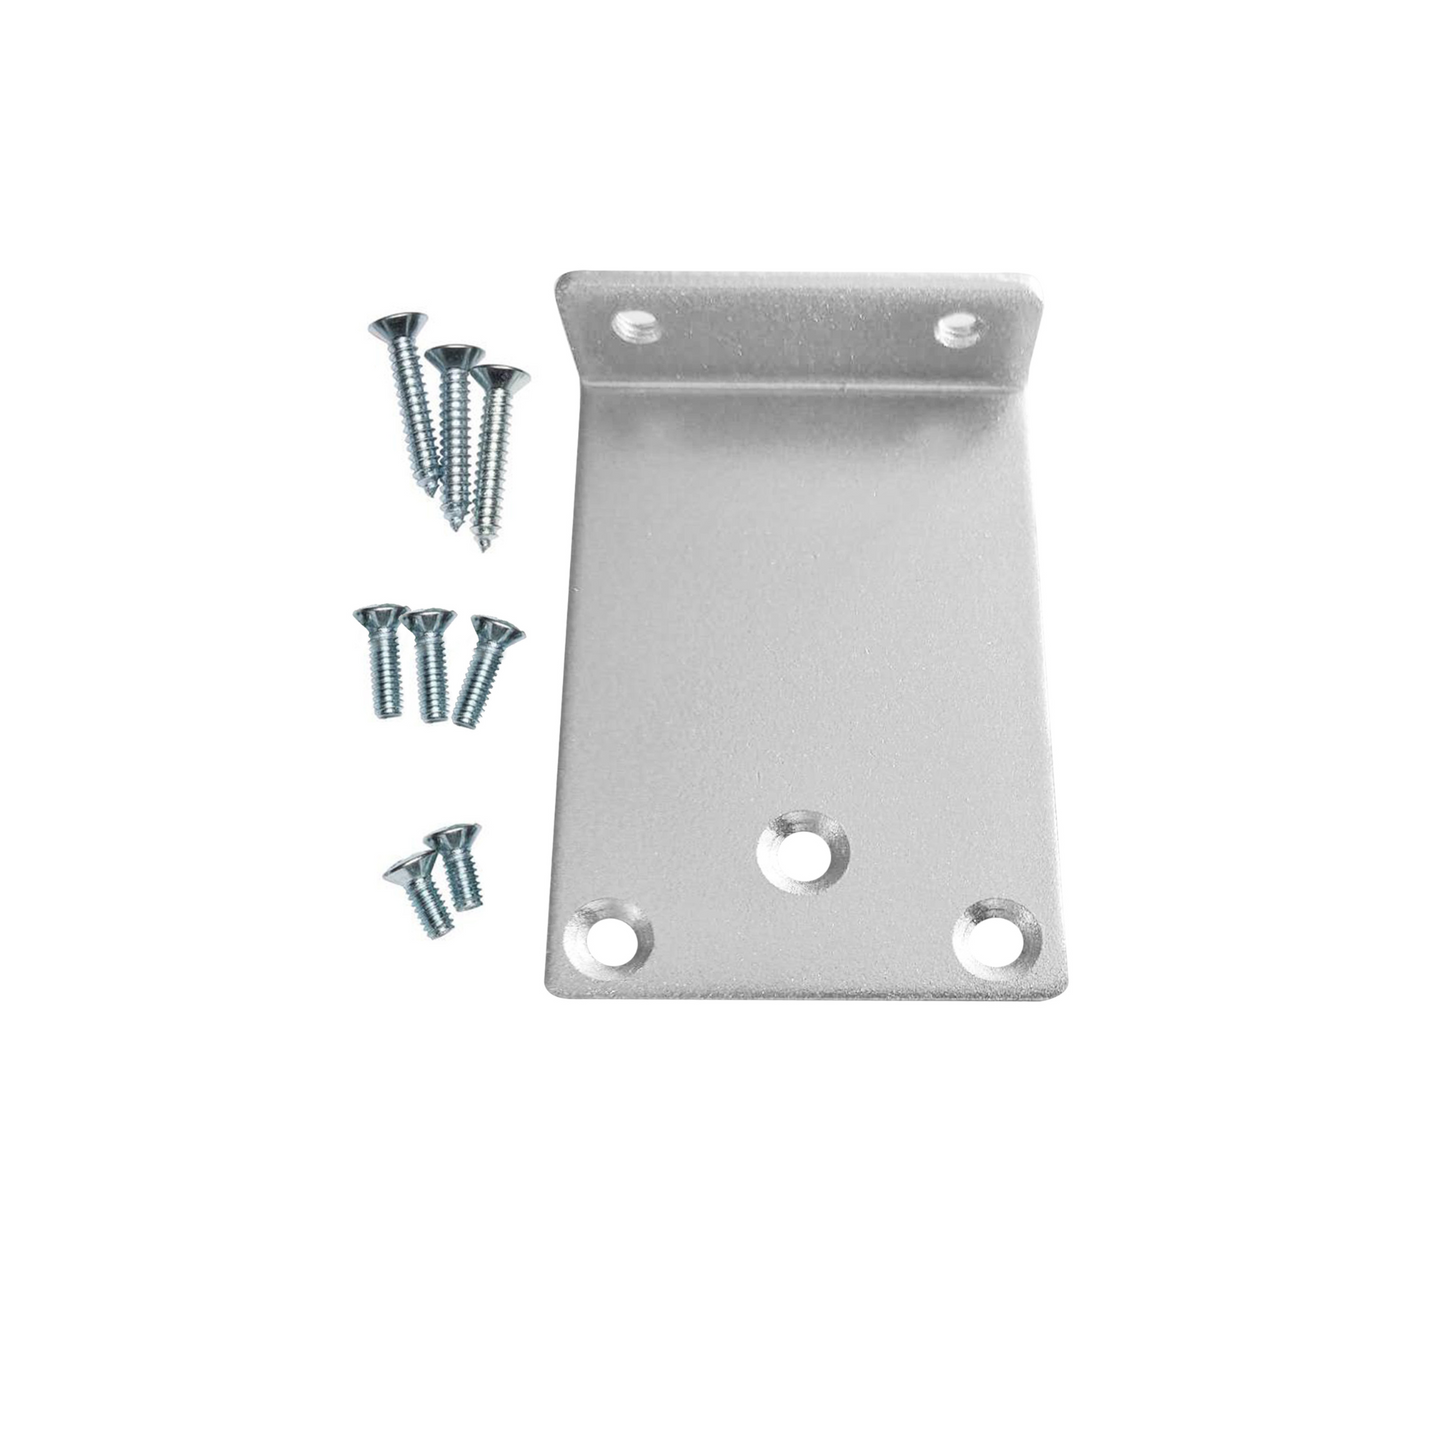 PALMAT deursluiter parallelle arm montageplaat aluminium afwerking vereist voor parallelle arm montage